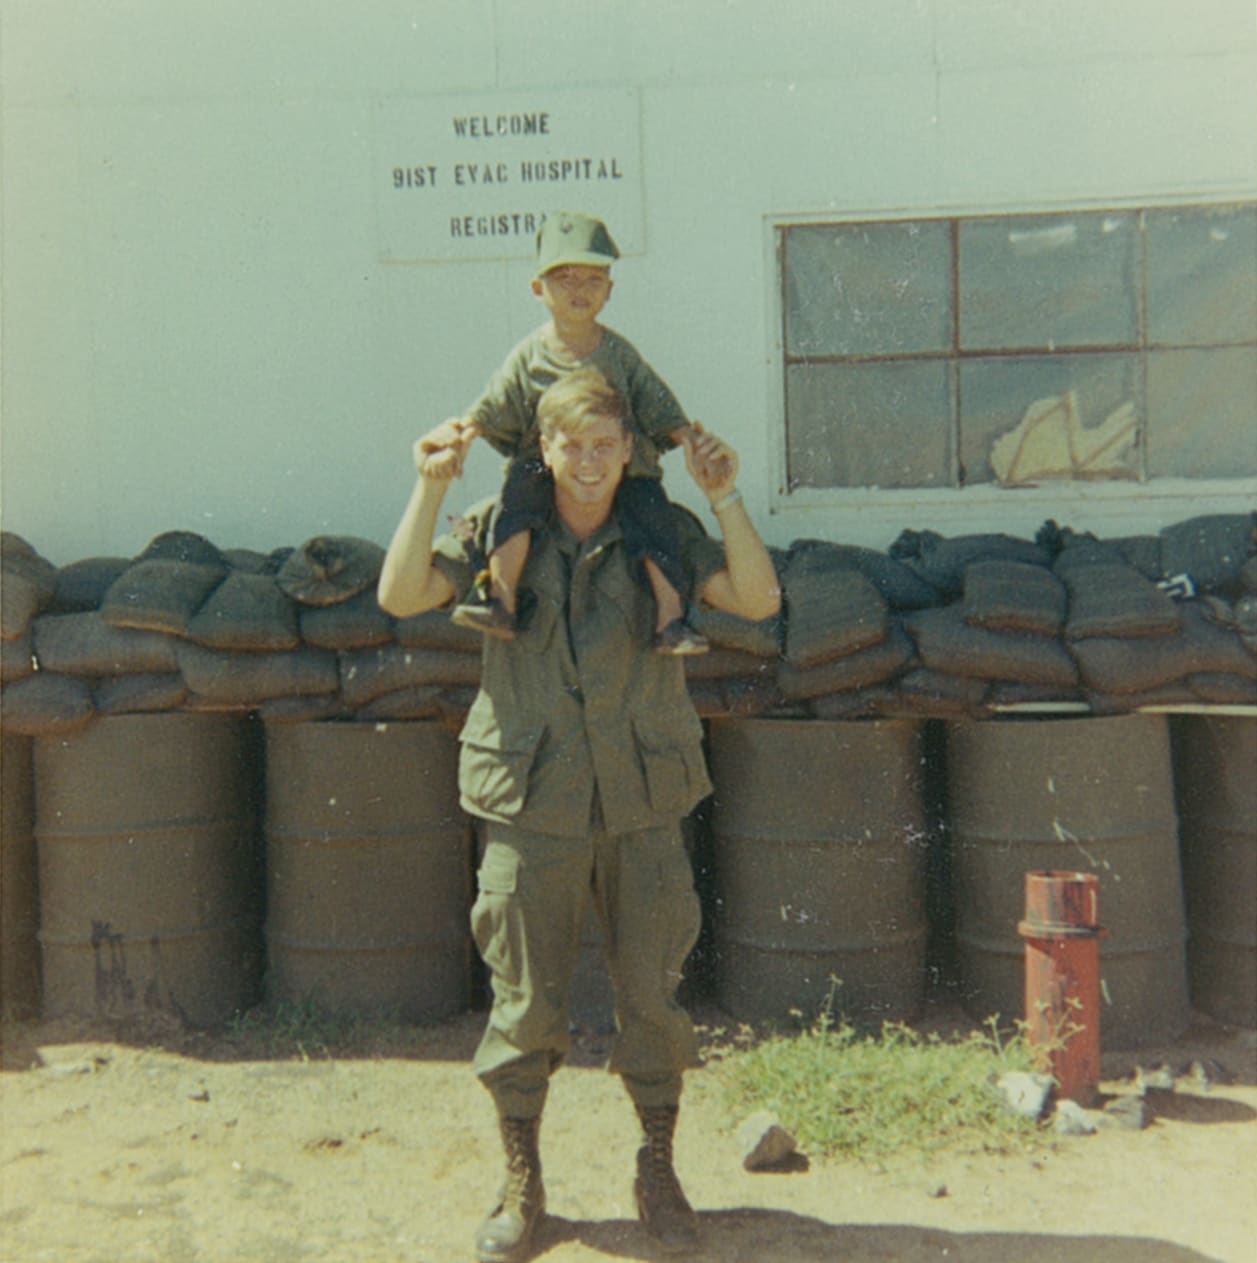 Former Army Medic Receives Medal of Honor for Vietnam War Heroism